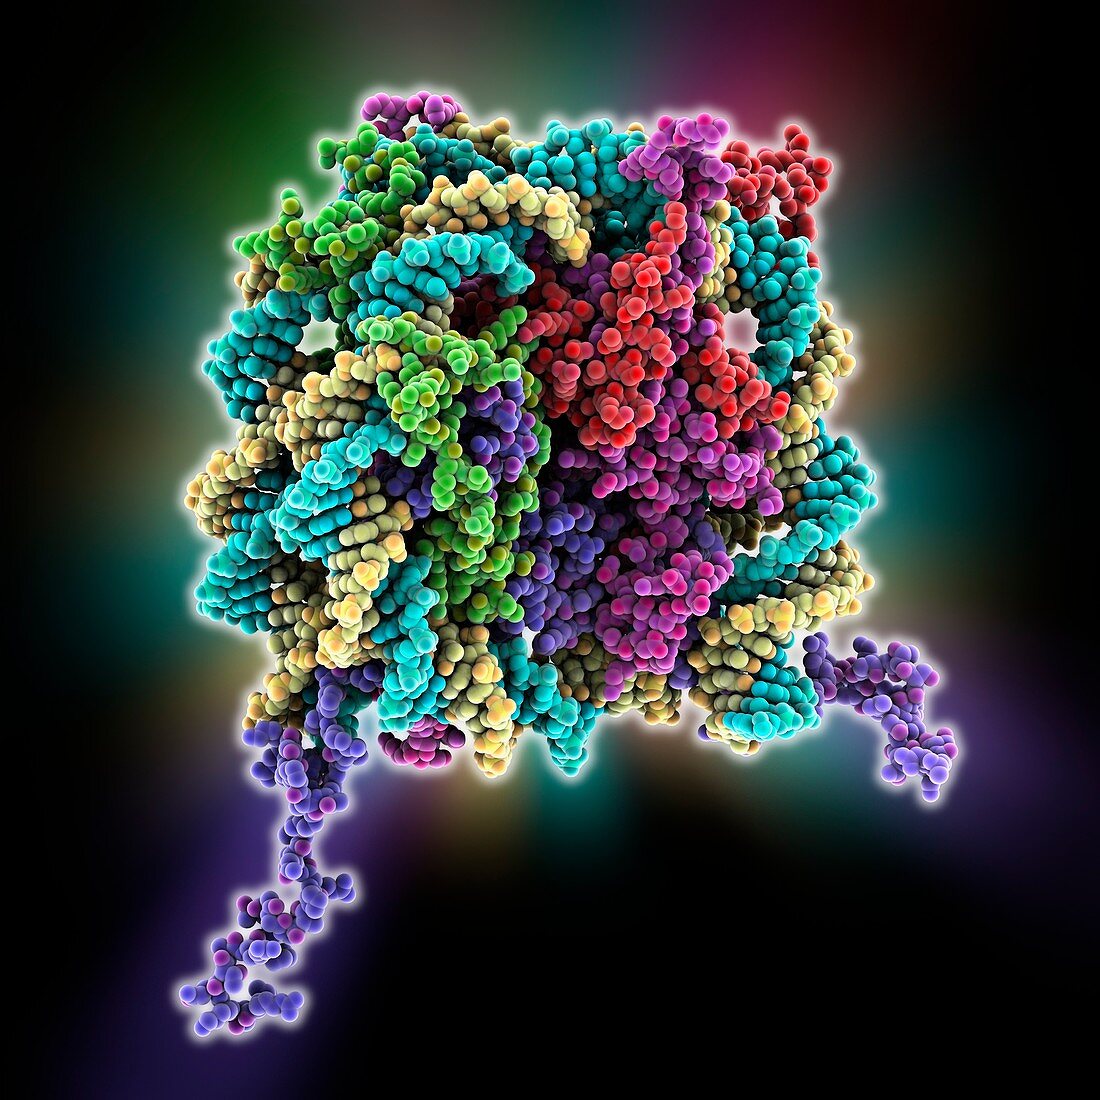 DNA nucleosome,molecular model